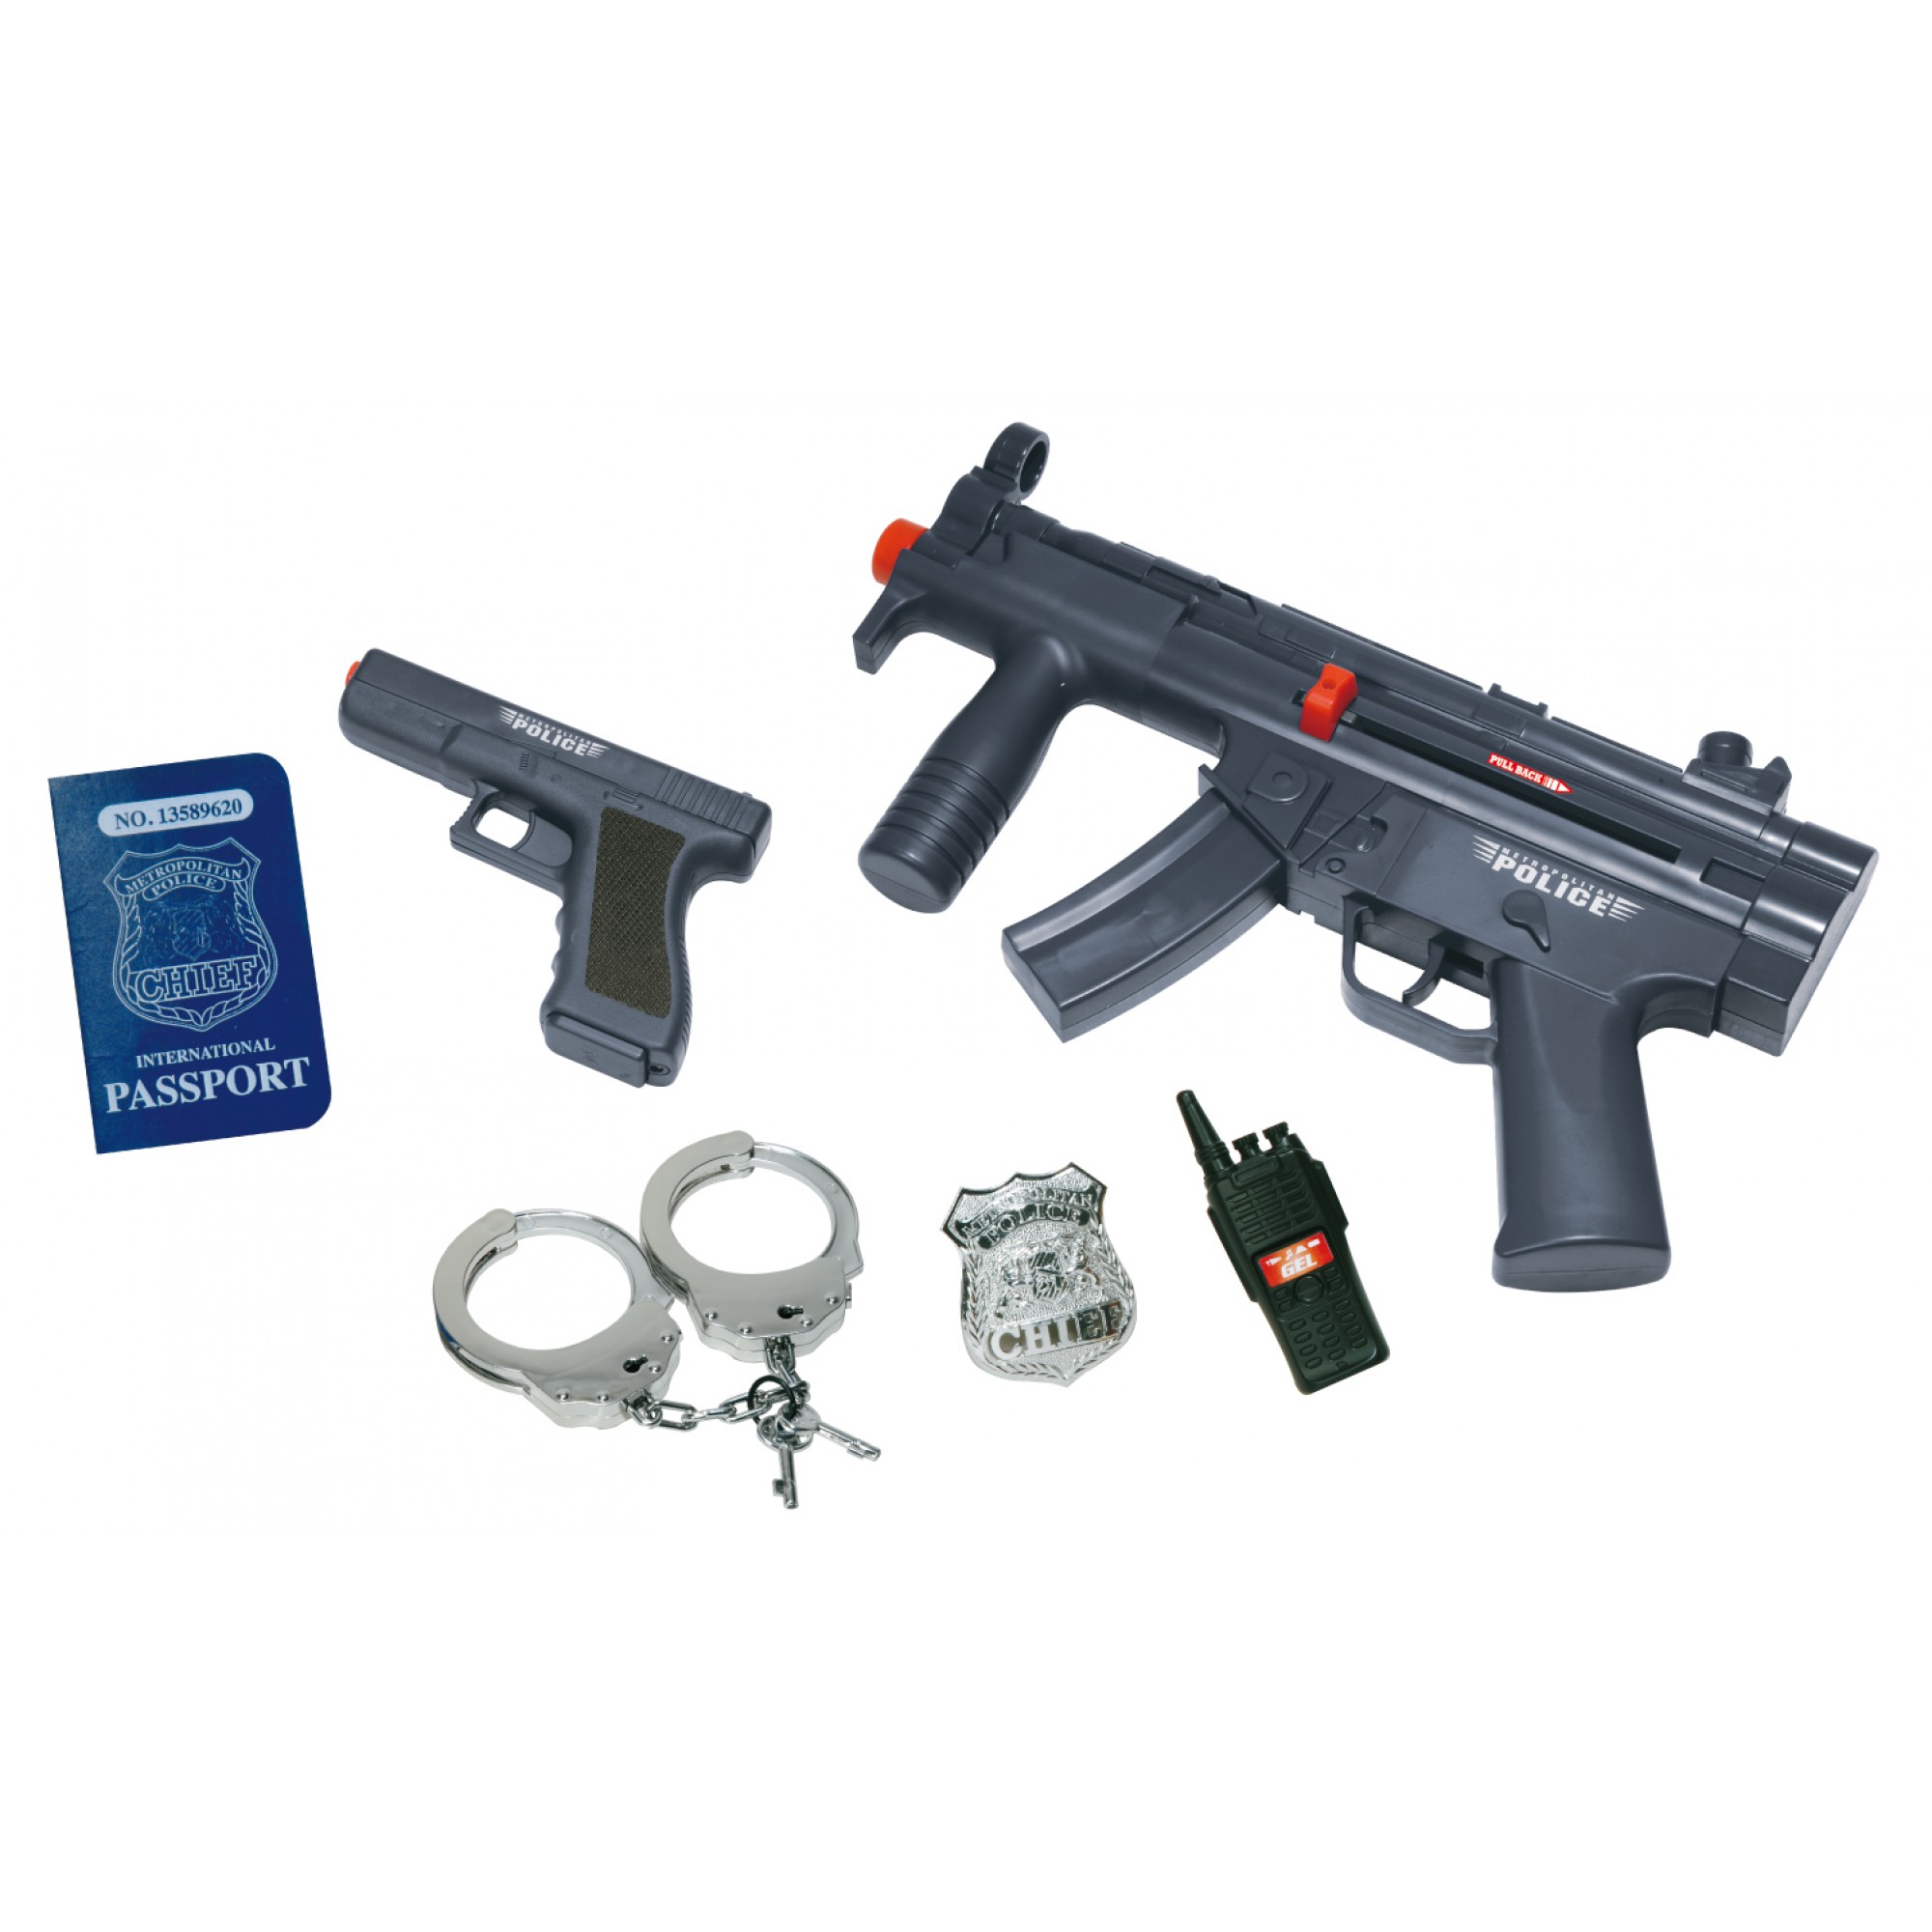 Police Play Set (MP5K + Glock 17)